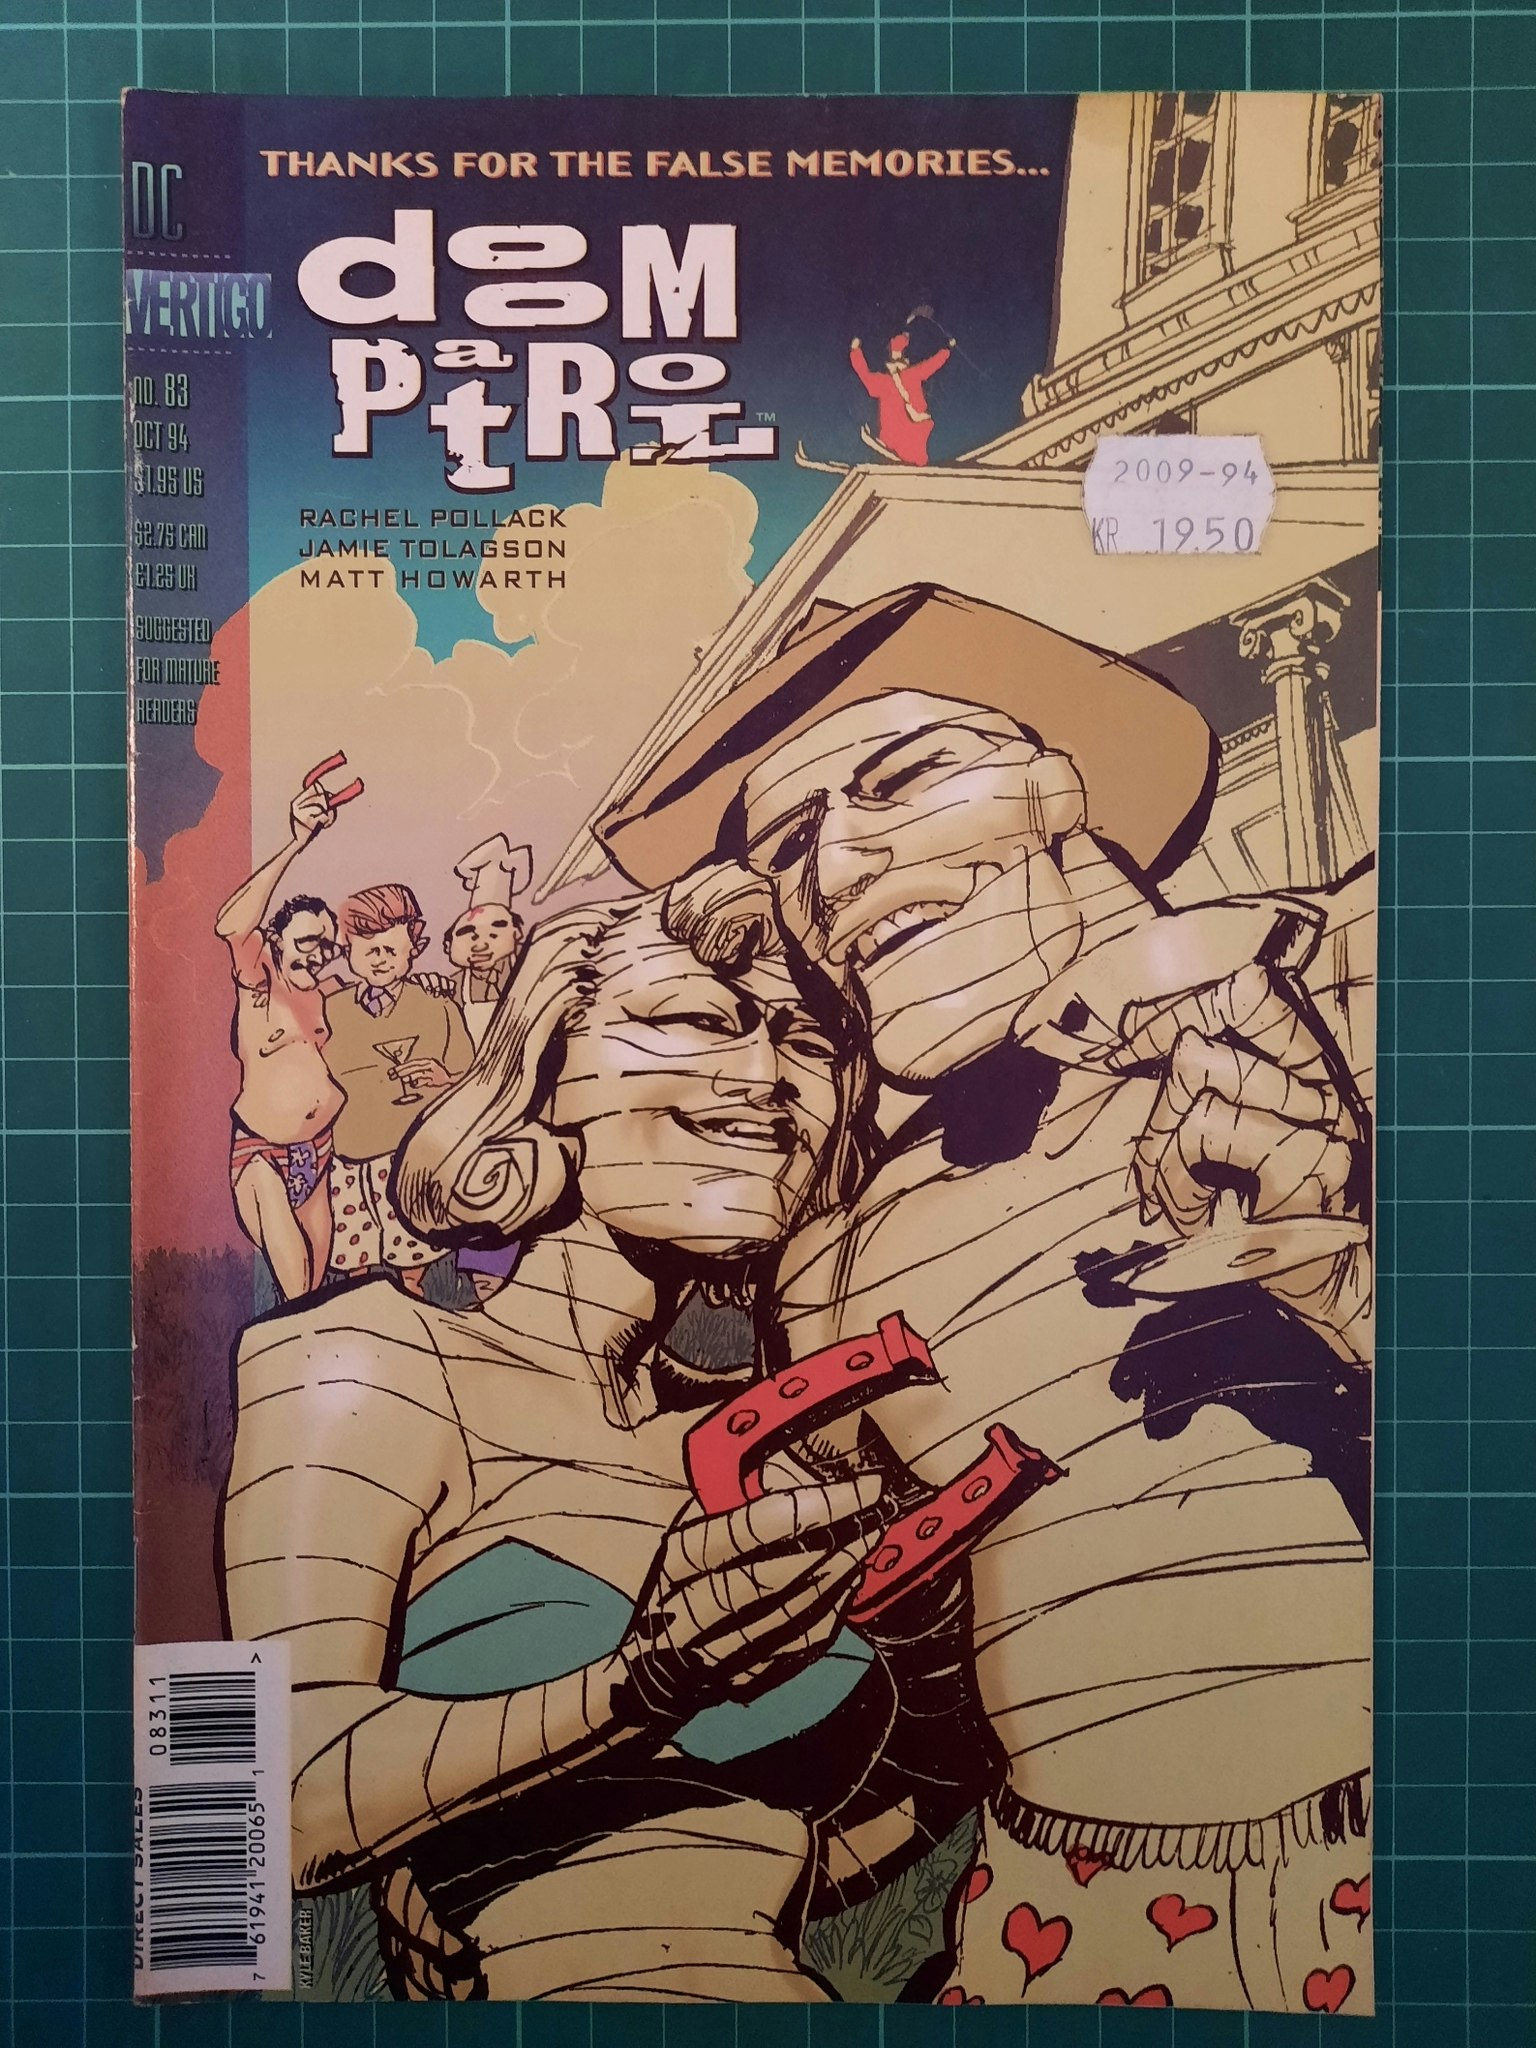 Doom patrol #83